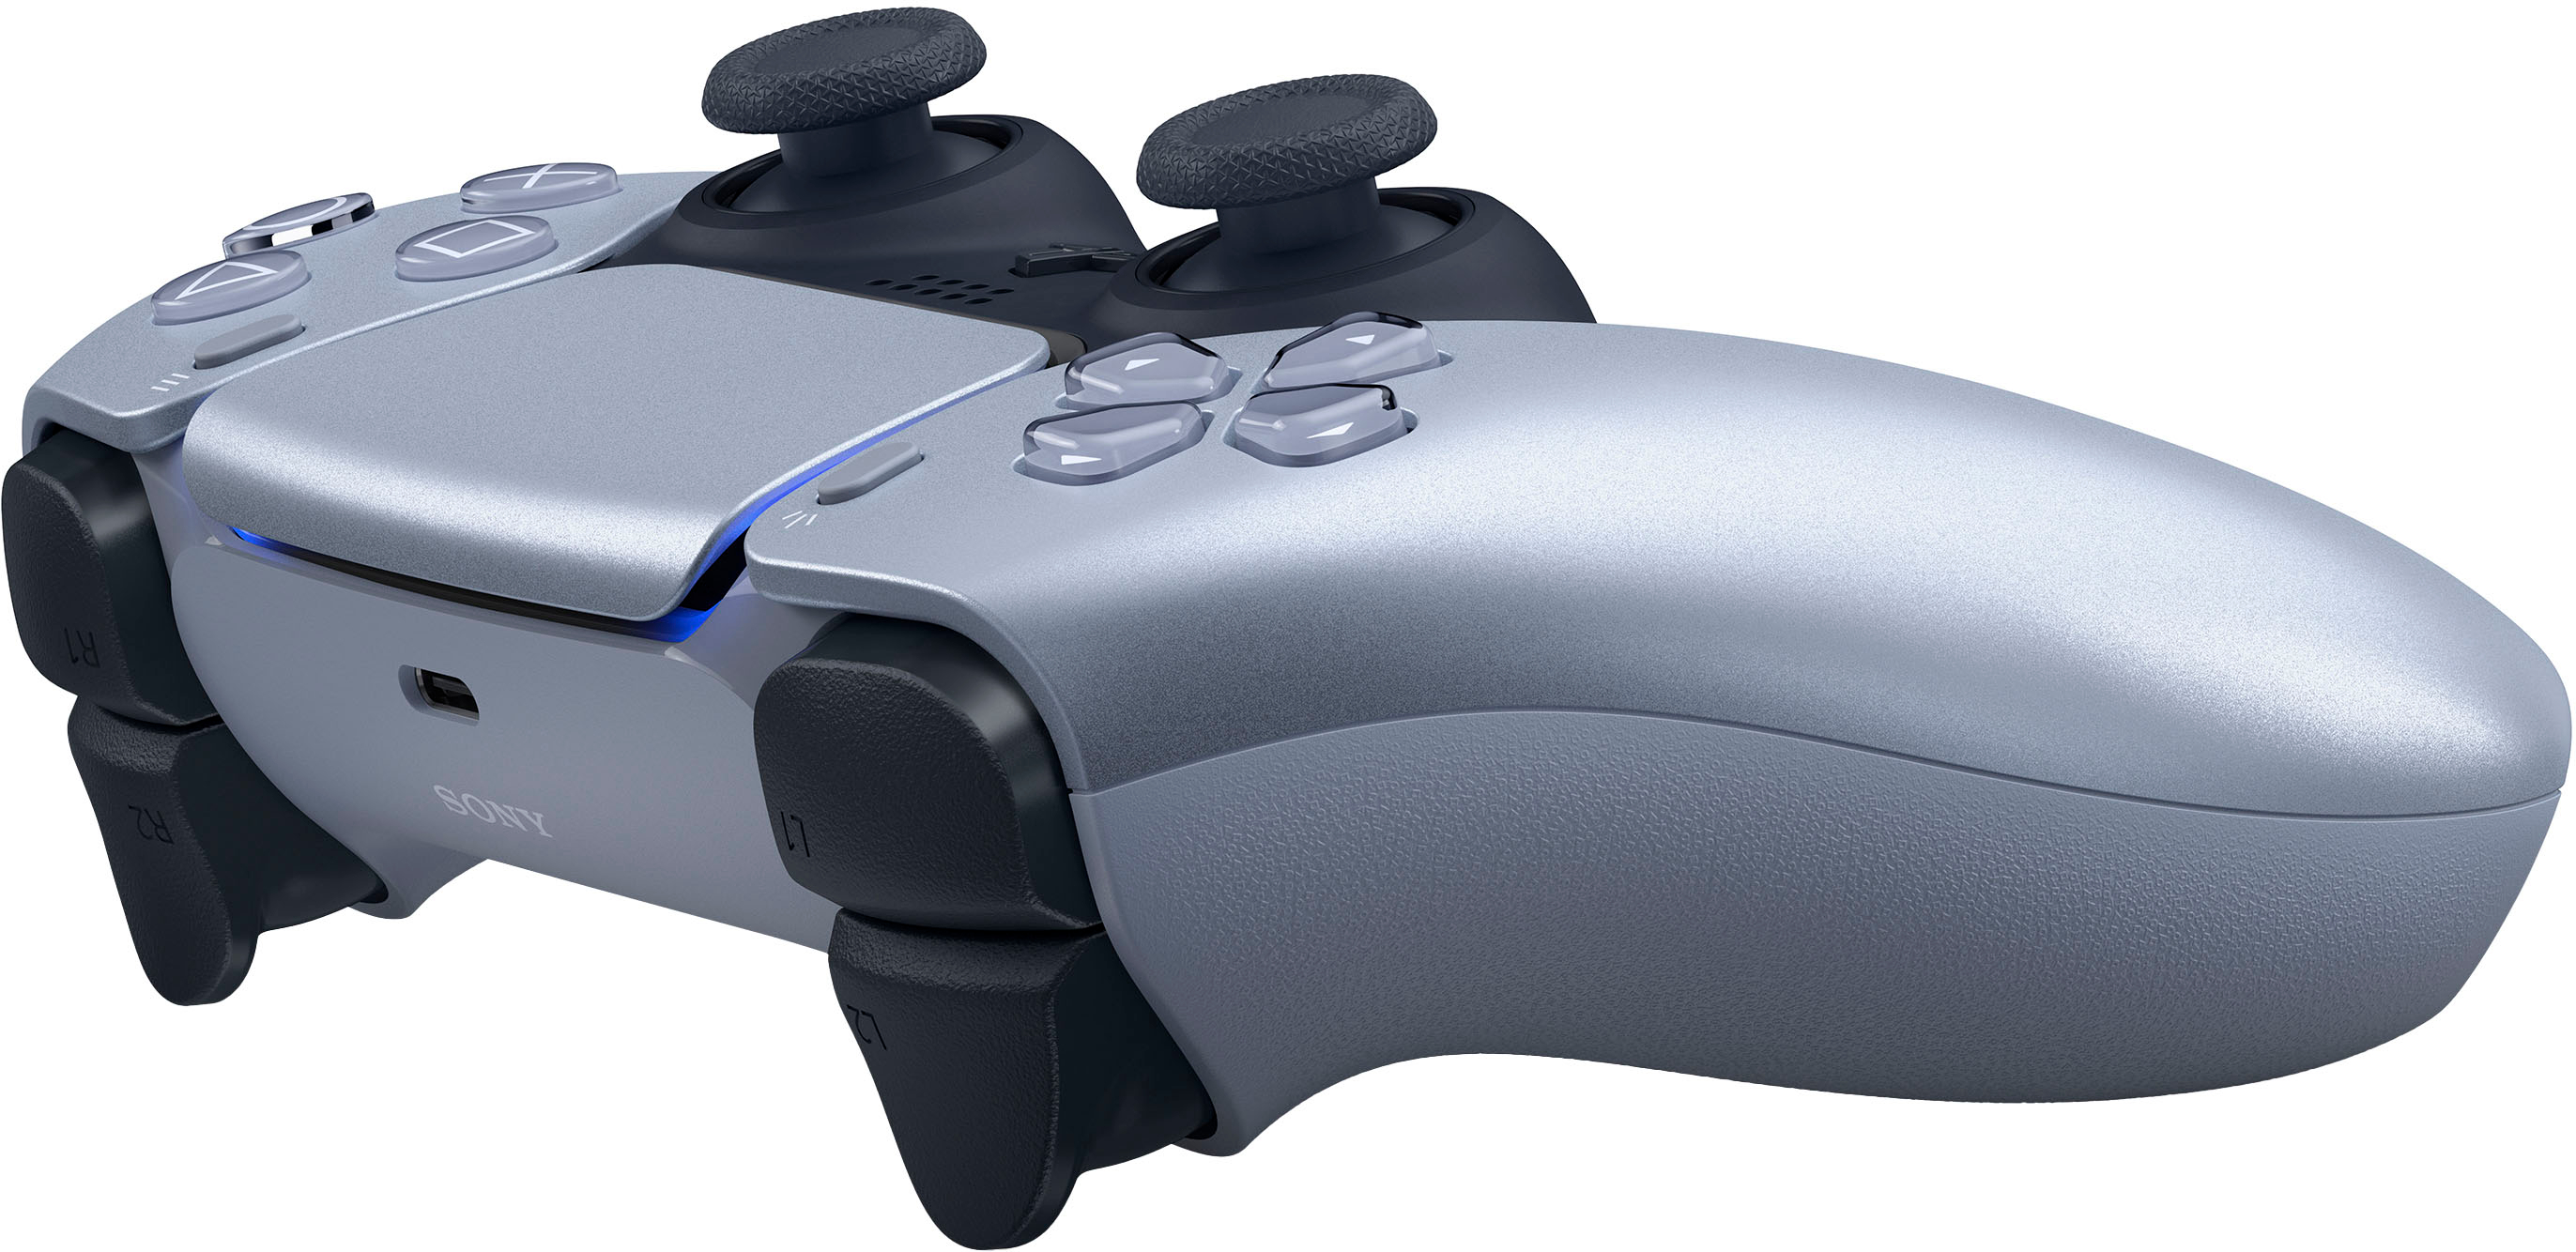 Sony Playstation 5 DualSense Wireless Controller